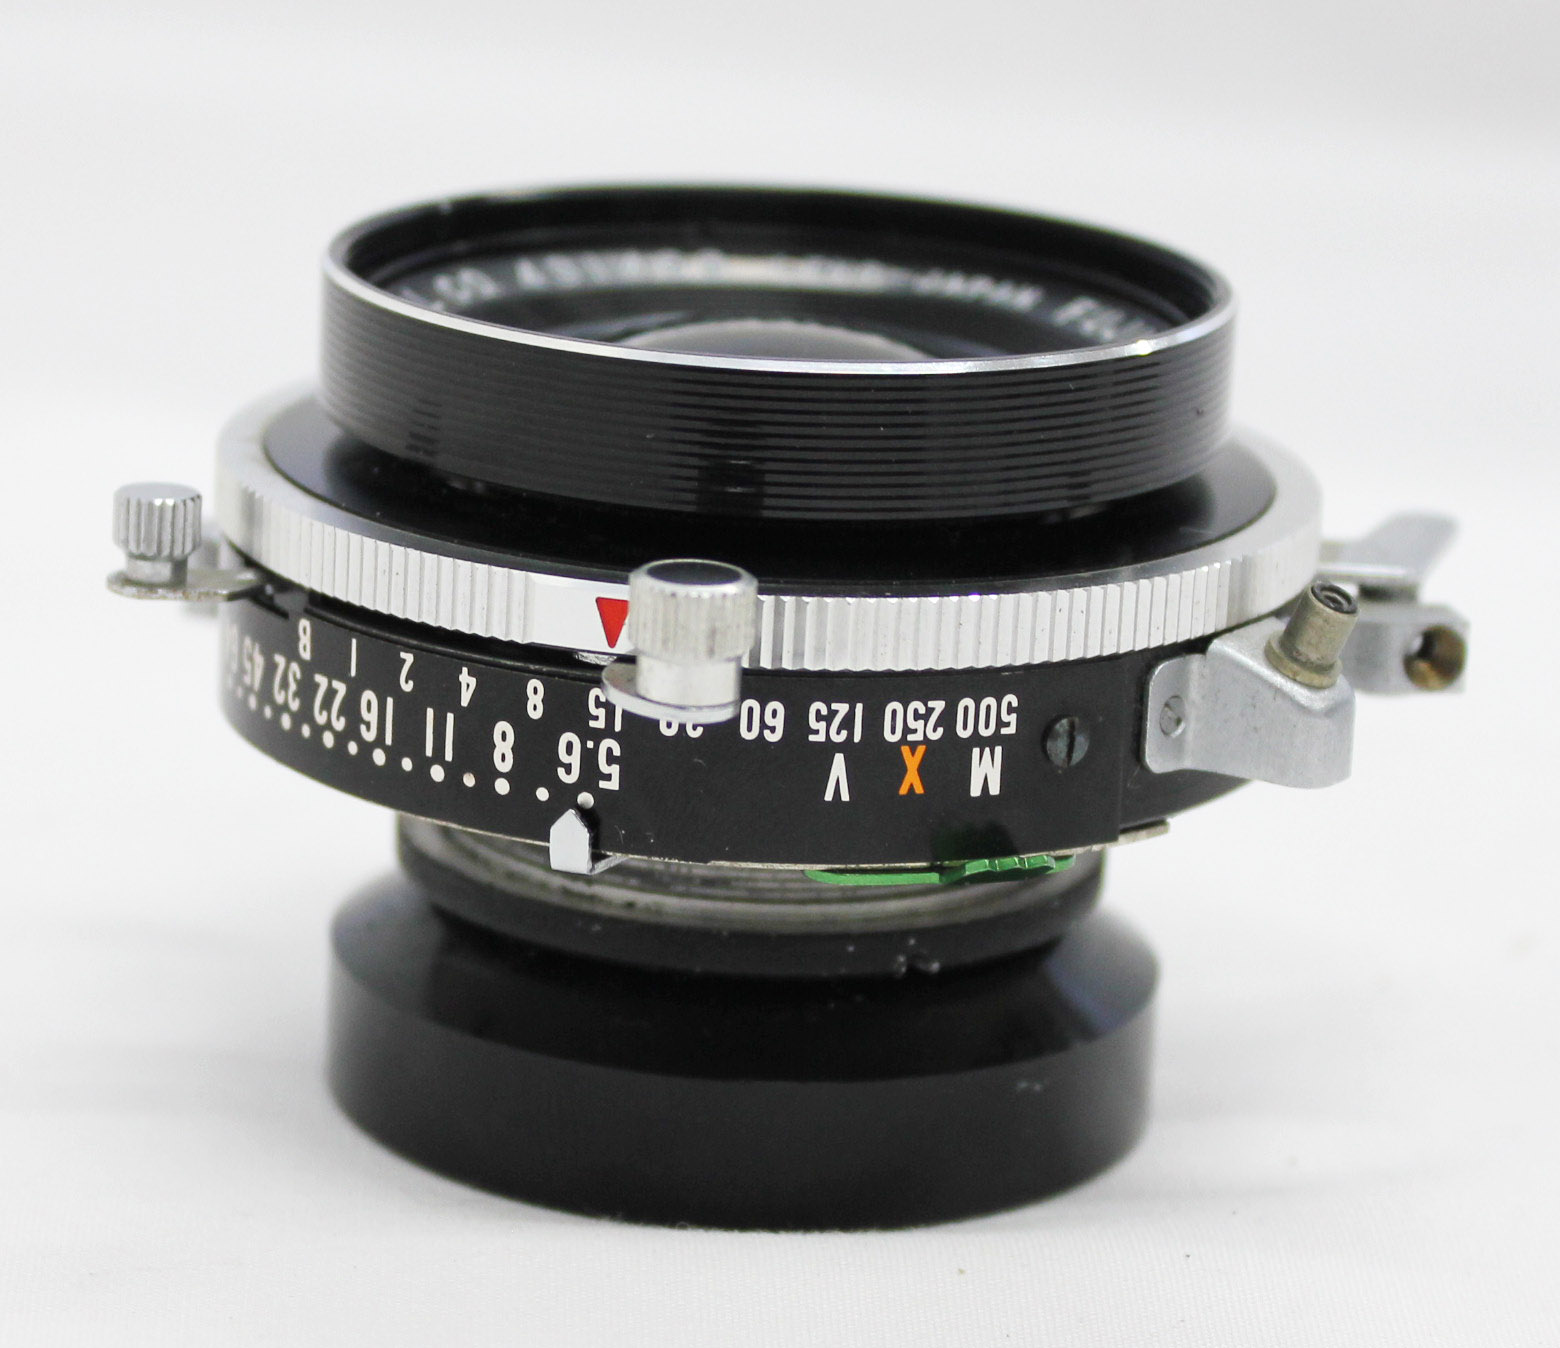 Fuji Fujinon W S 135mm F/5.6 4x5 Large Format Lens with Seiko Shutter